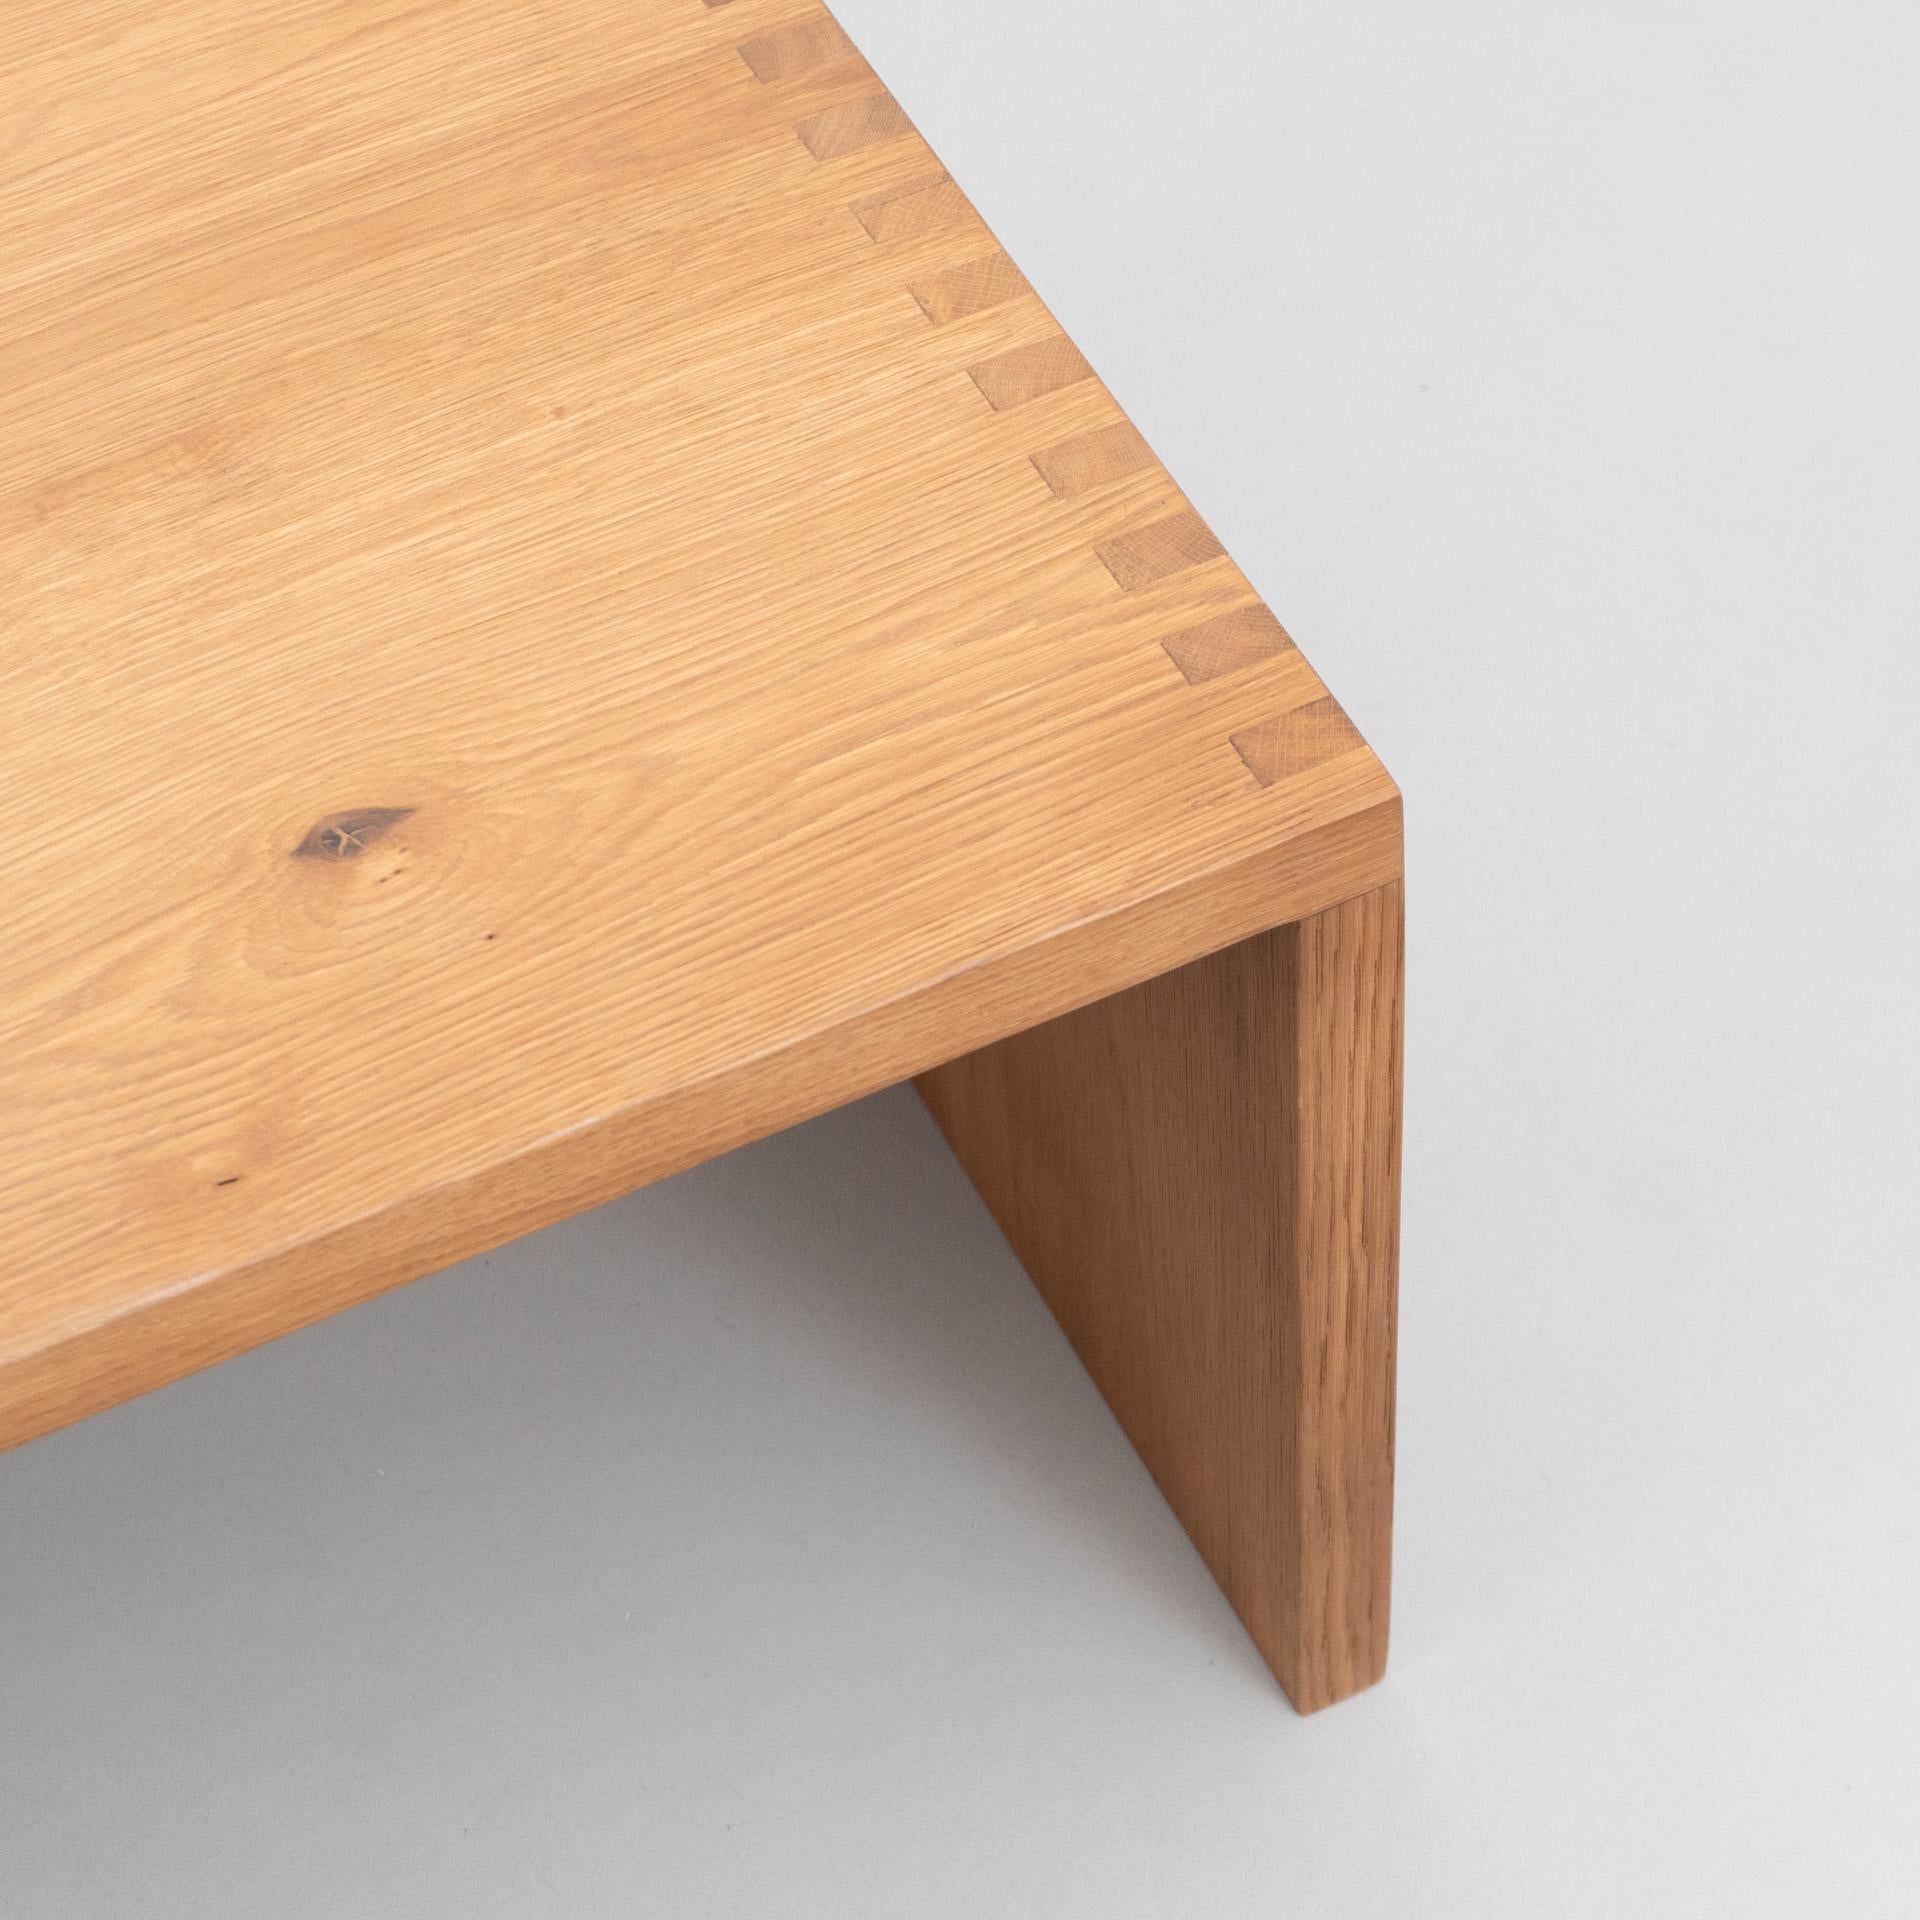 Spanish Dada Est. Contemporary Solid Oak Low Table